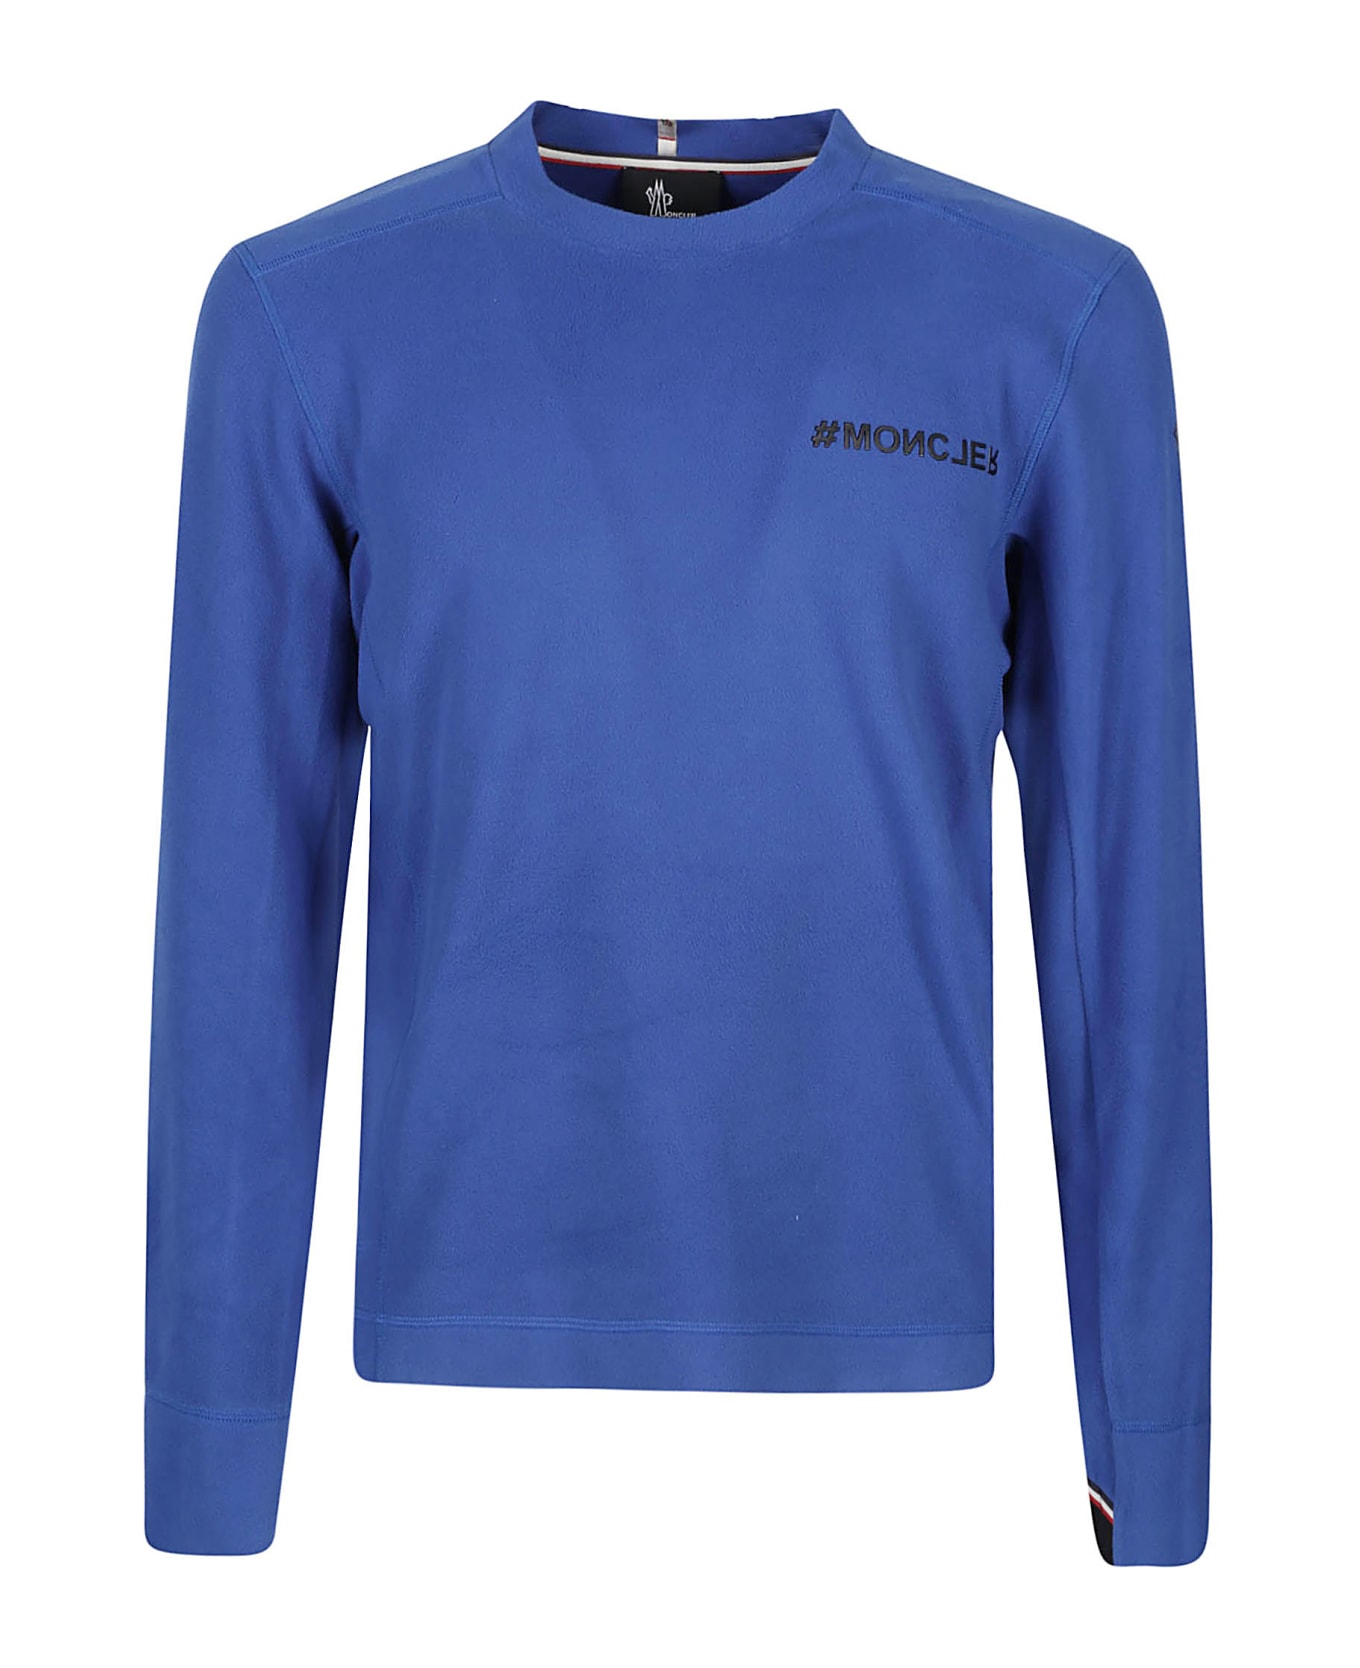 Moncler Grenoble Sweatshirt - G Bluette